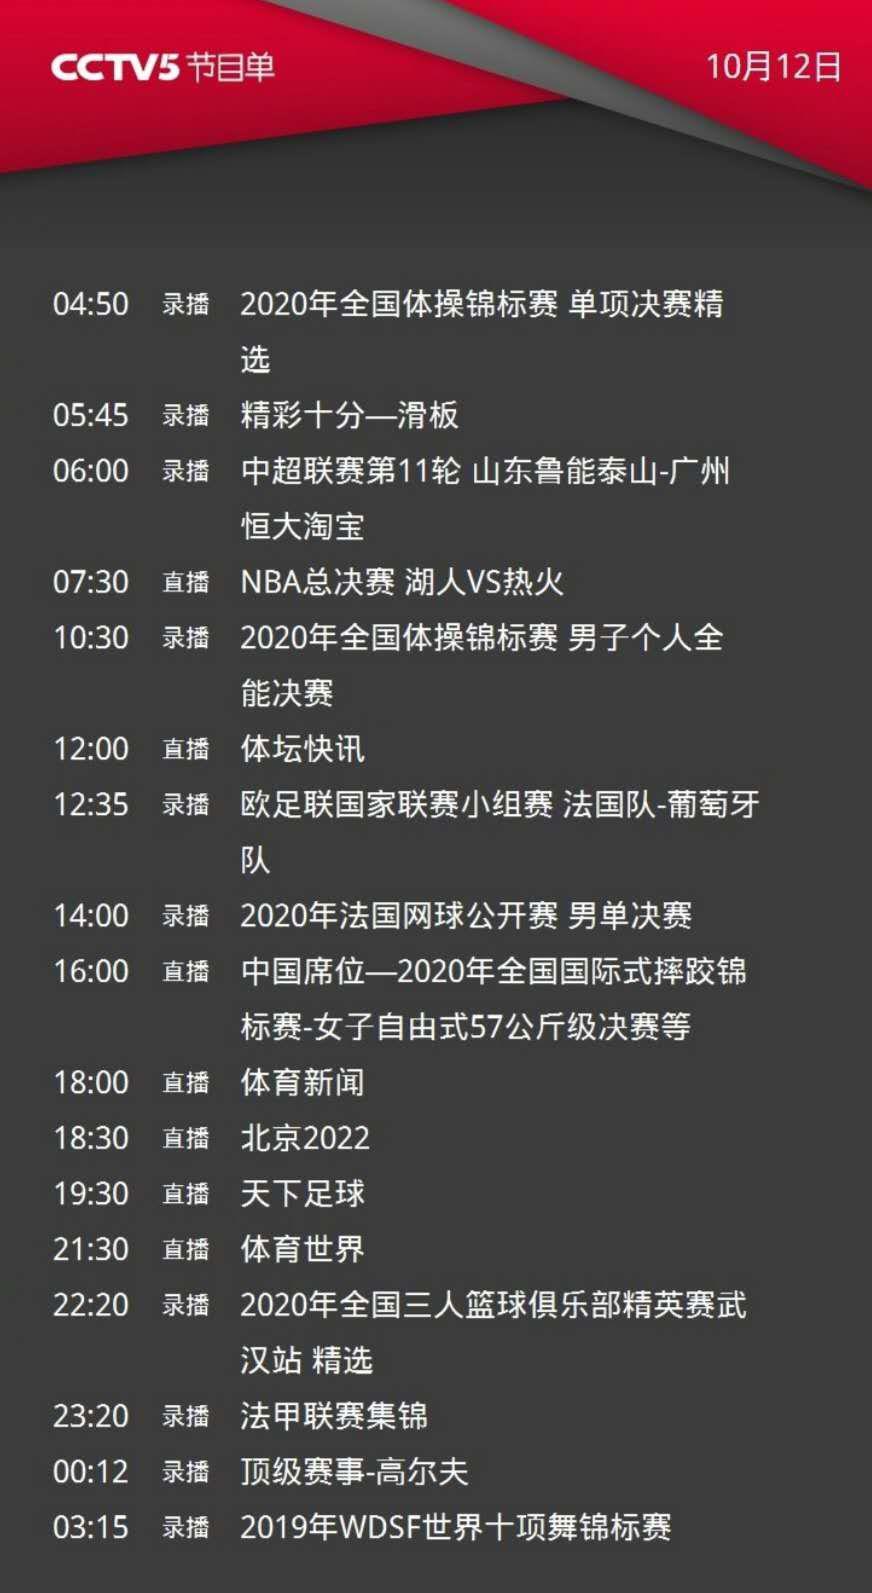 cctv5nba节目预告 CCTV5今日节目单(2)